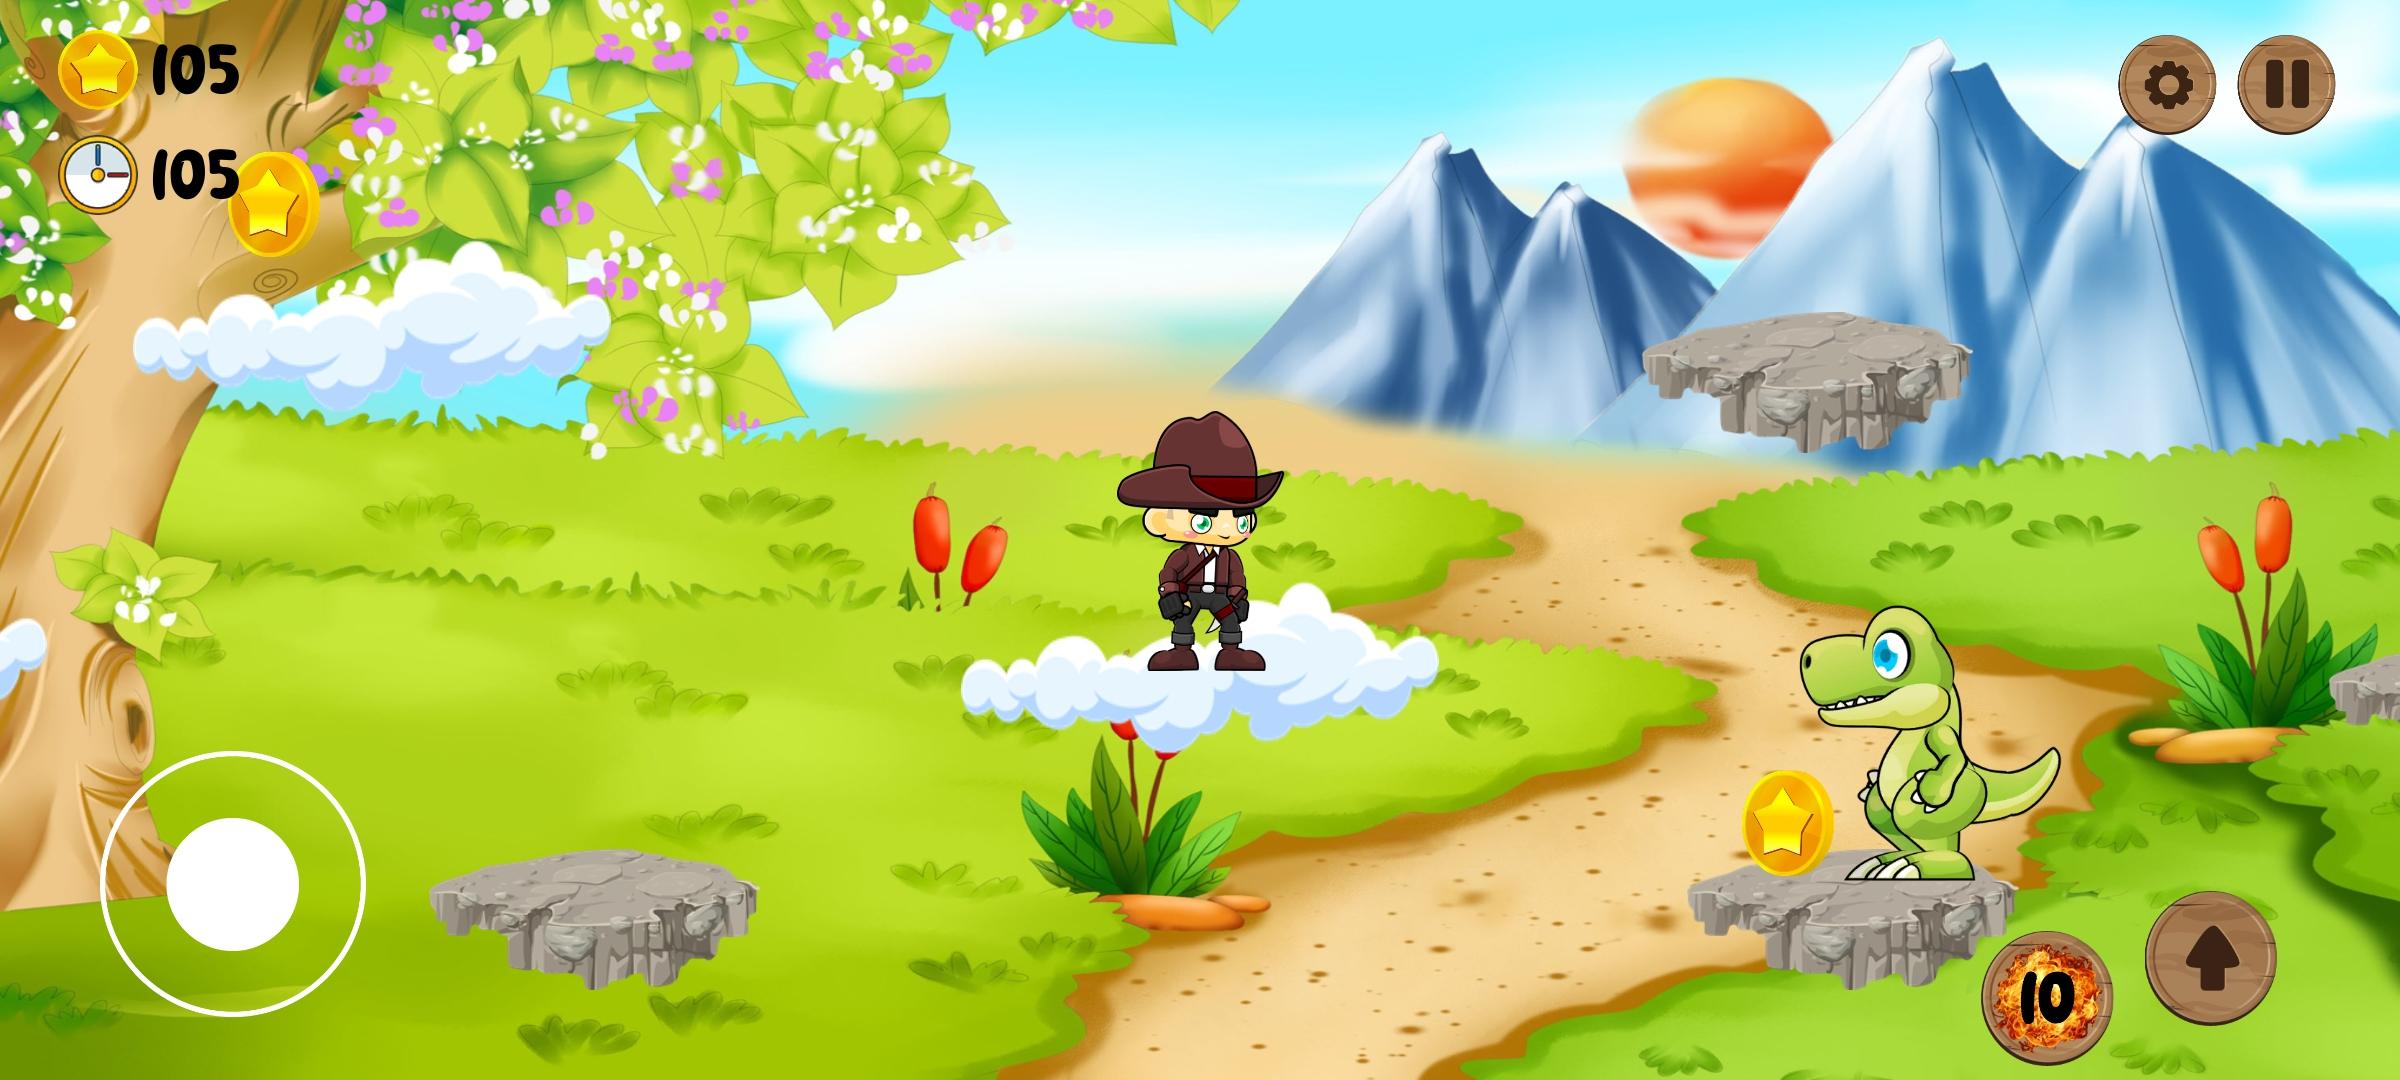 RFG - Adventure Boy 1.6 Screenshot 7